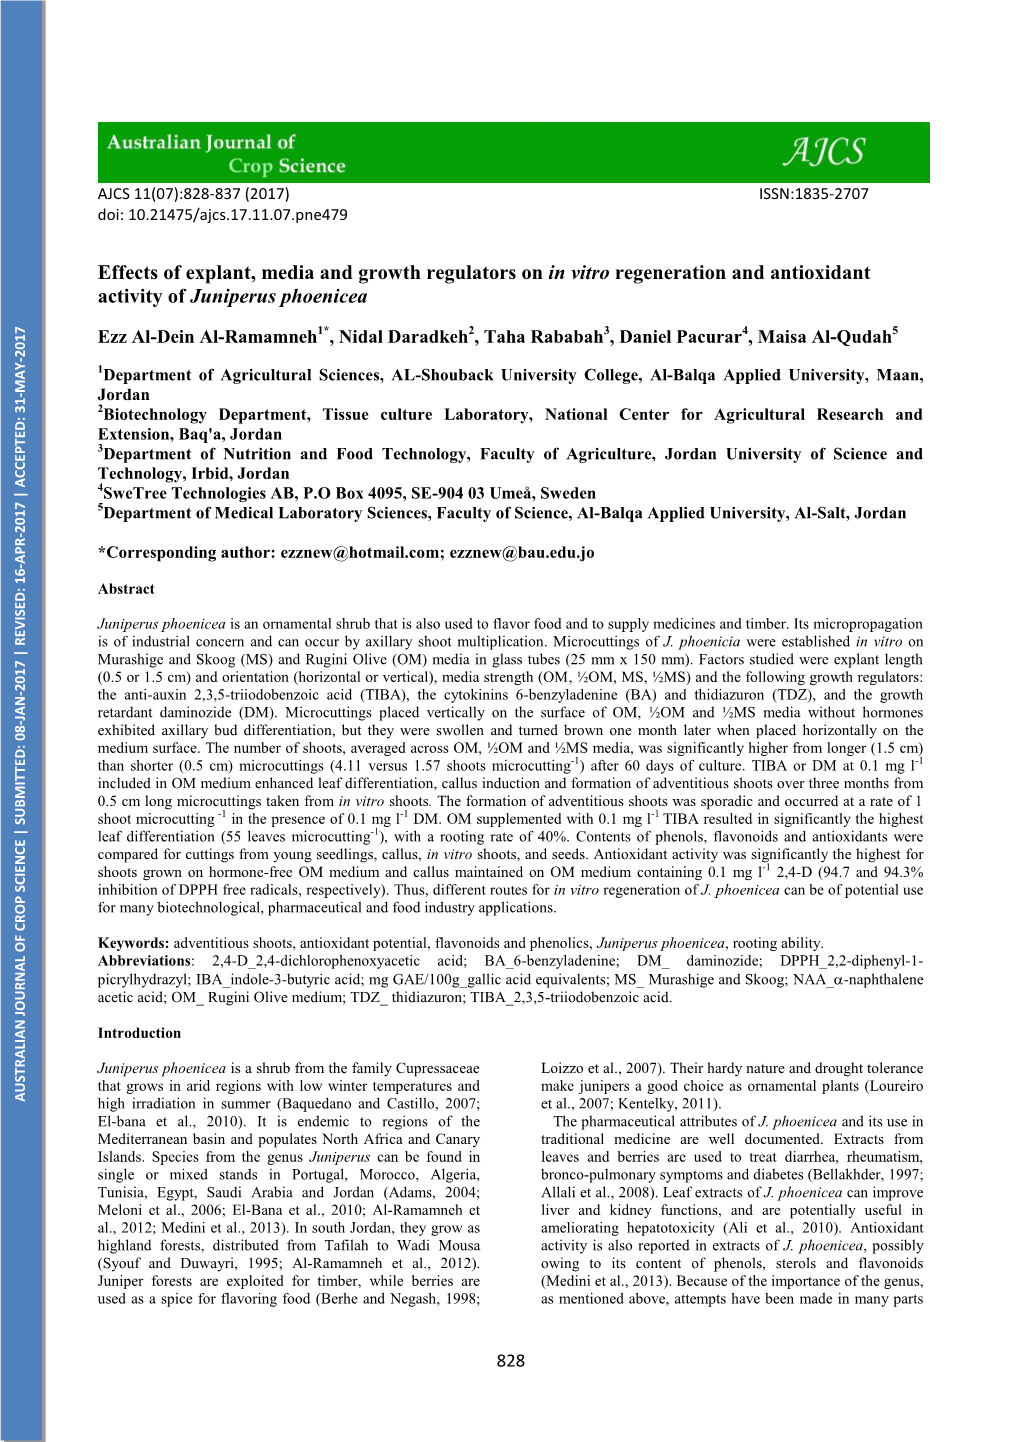 Effects of Explant, Media and Growth Regulators on in Vitro Regeneration and Antioxidant Activity of Juniperus Phoenicea